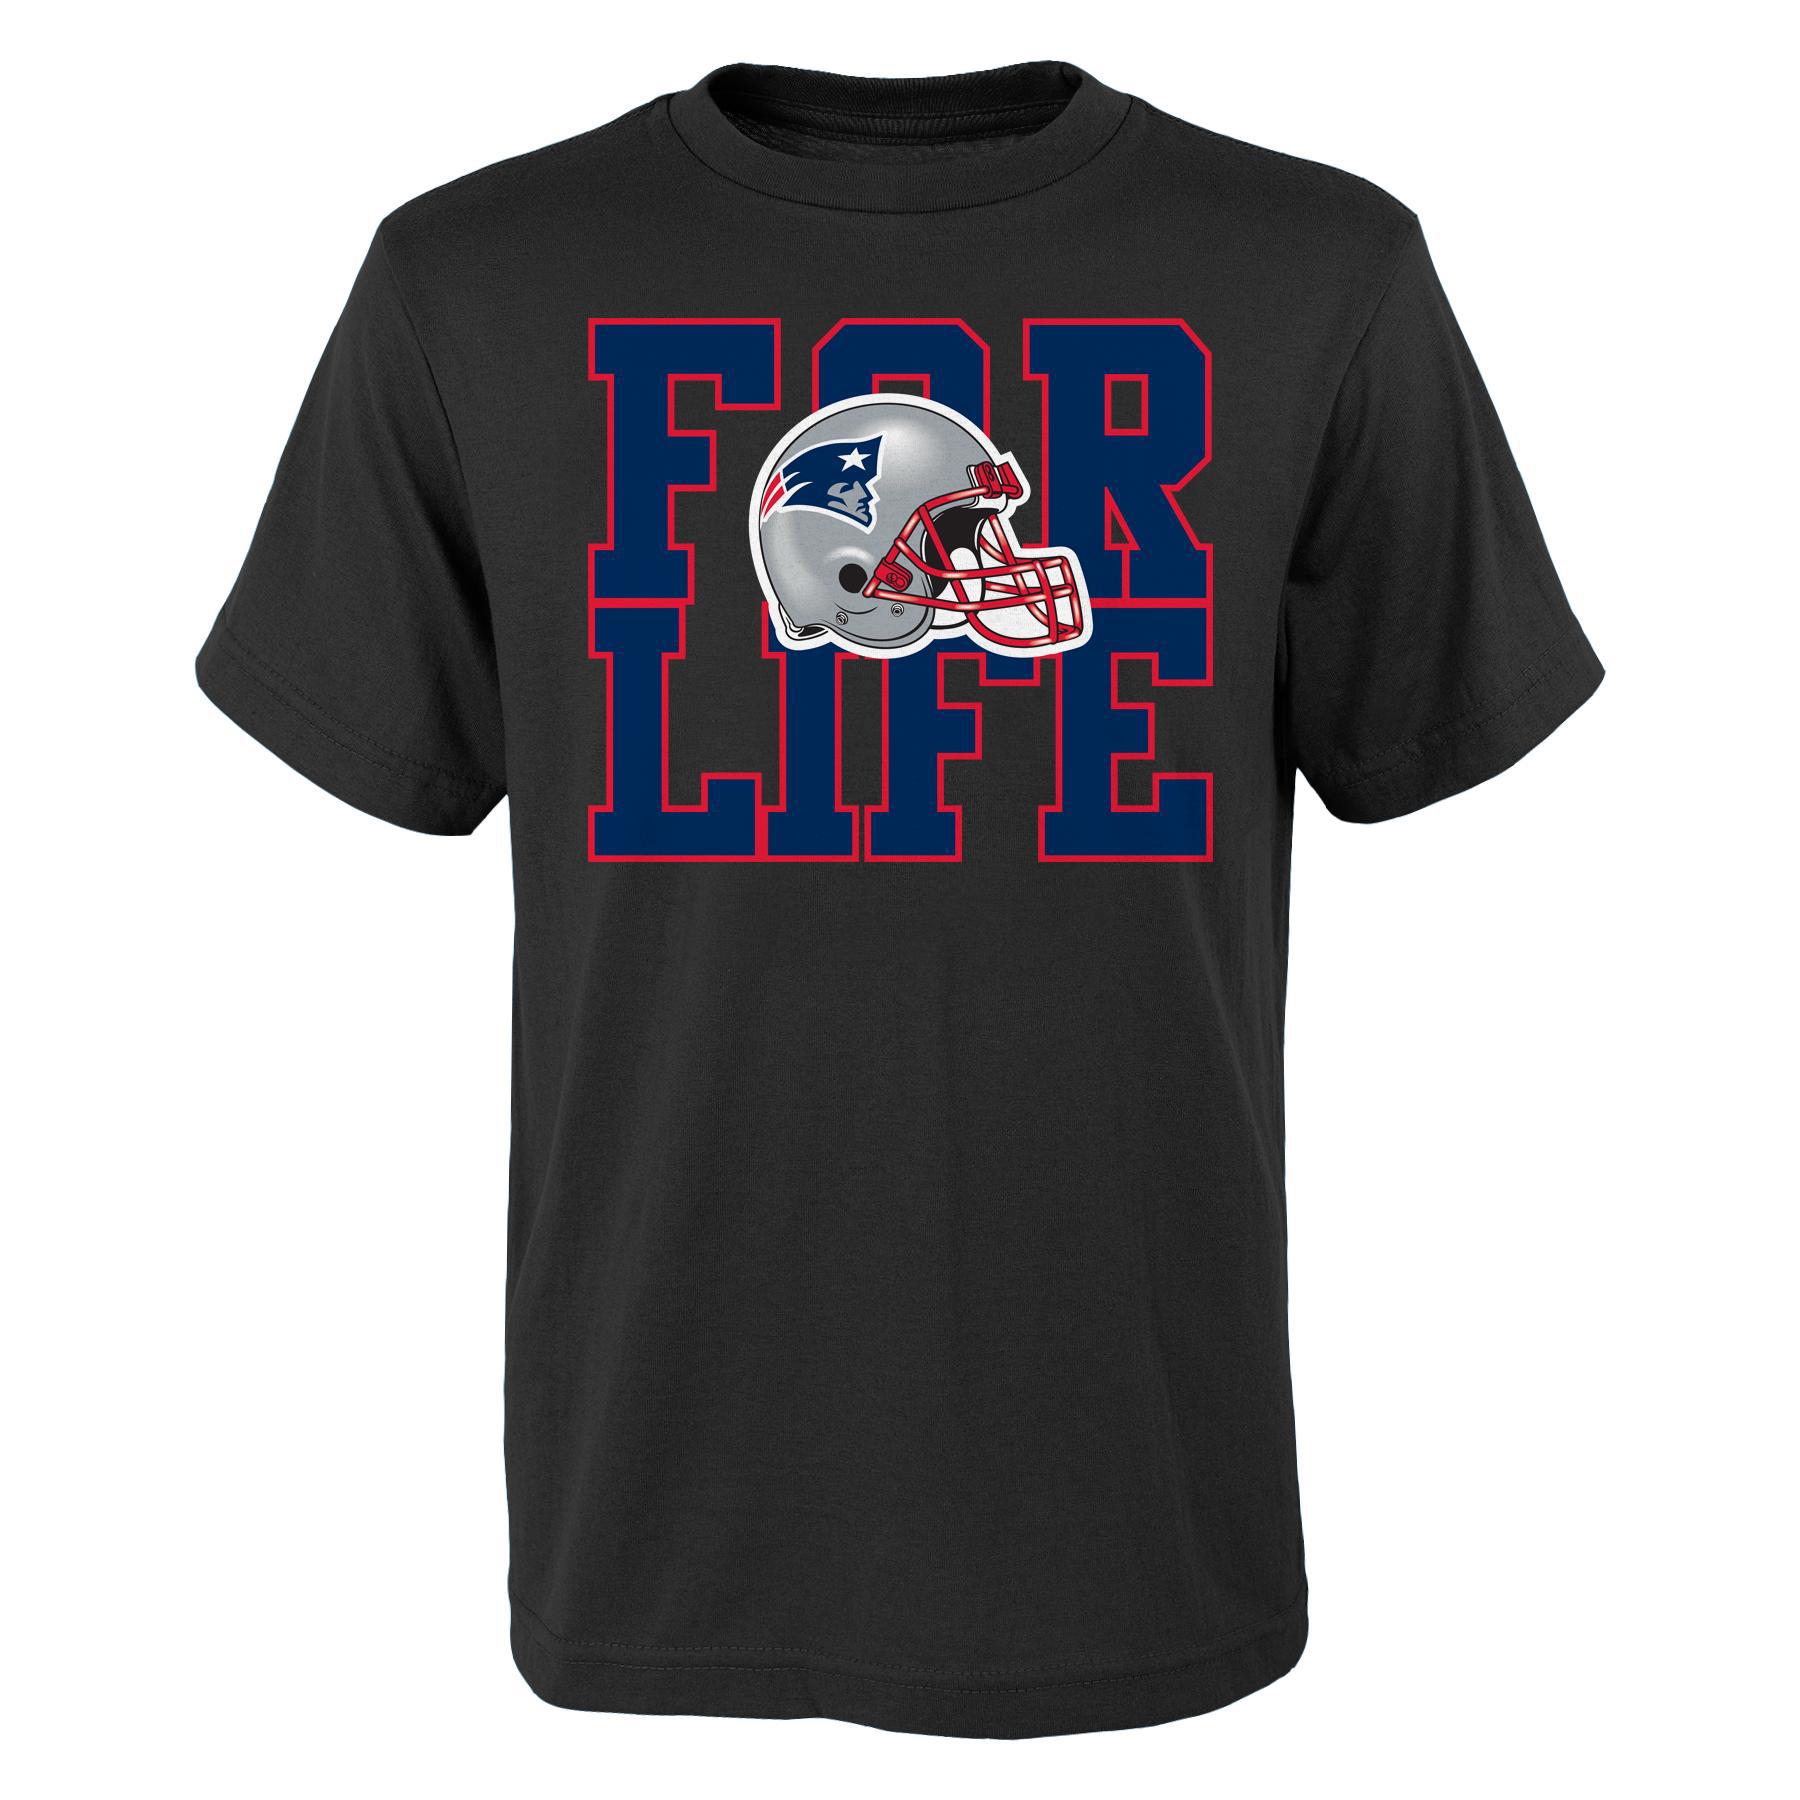 NFL Boys' Graphic T-Shirt - New England Patriots